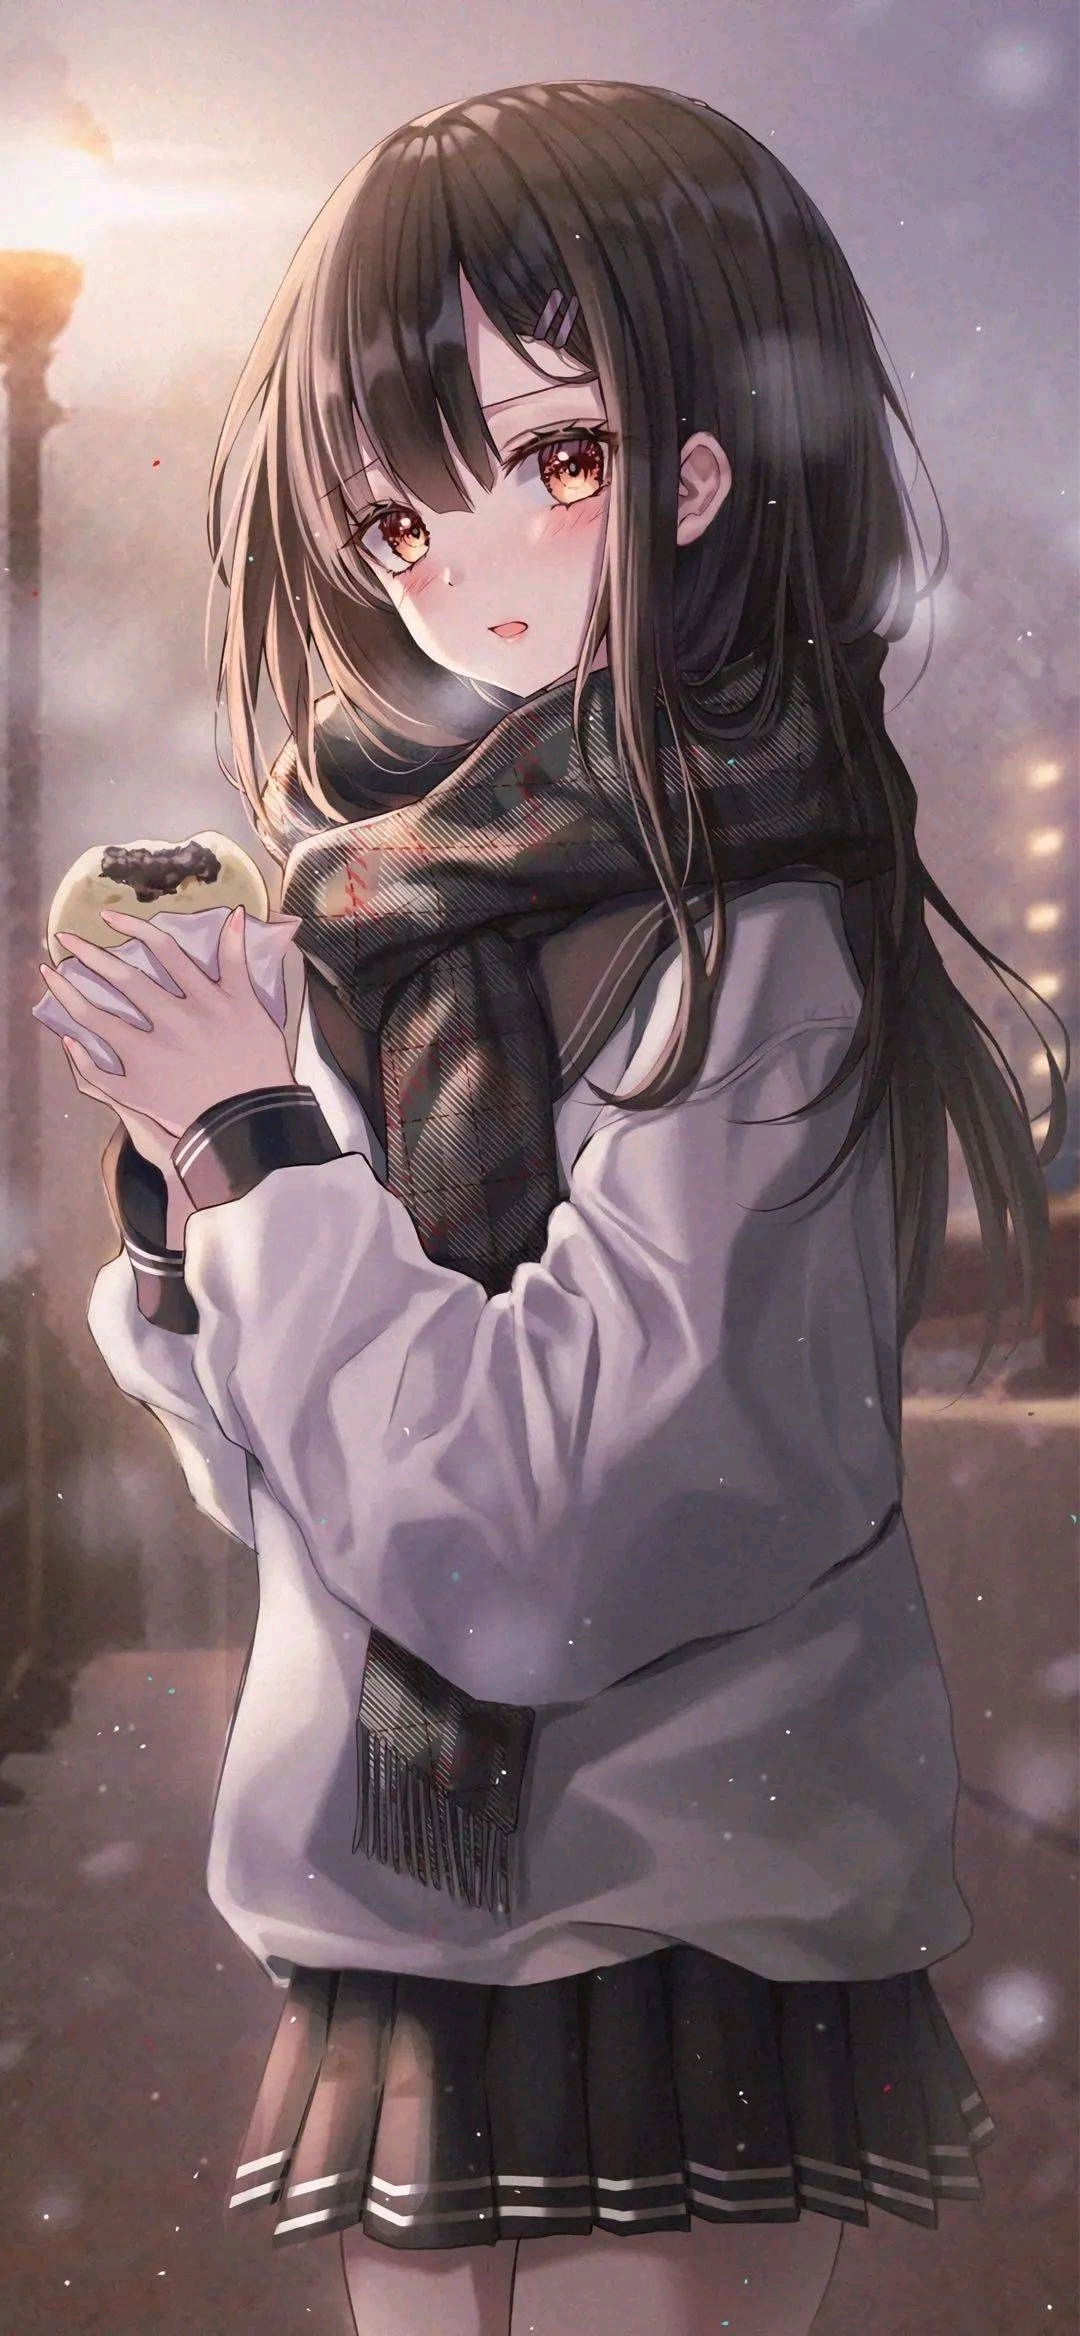 Anime 1080x2336 anime anime girls food eating scarf school uniform dark hair brown eyes Icebox46 artwork